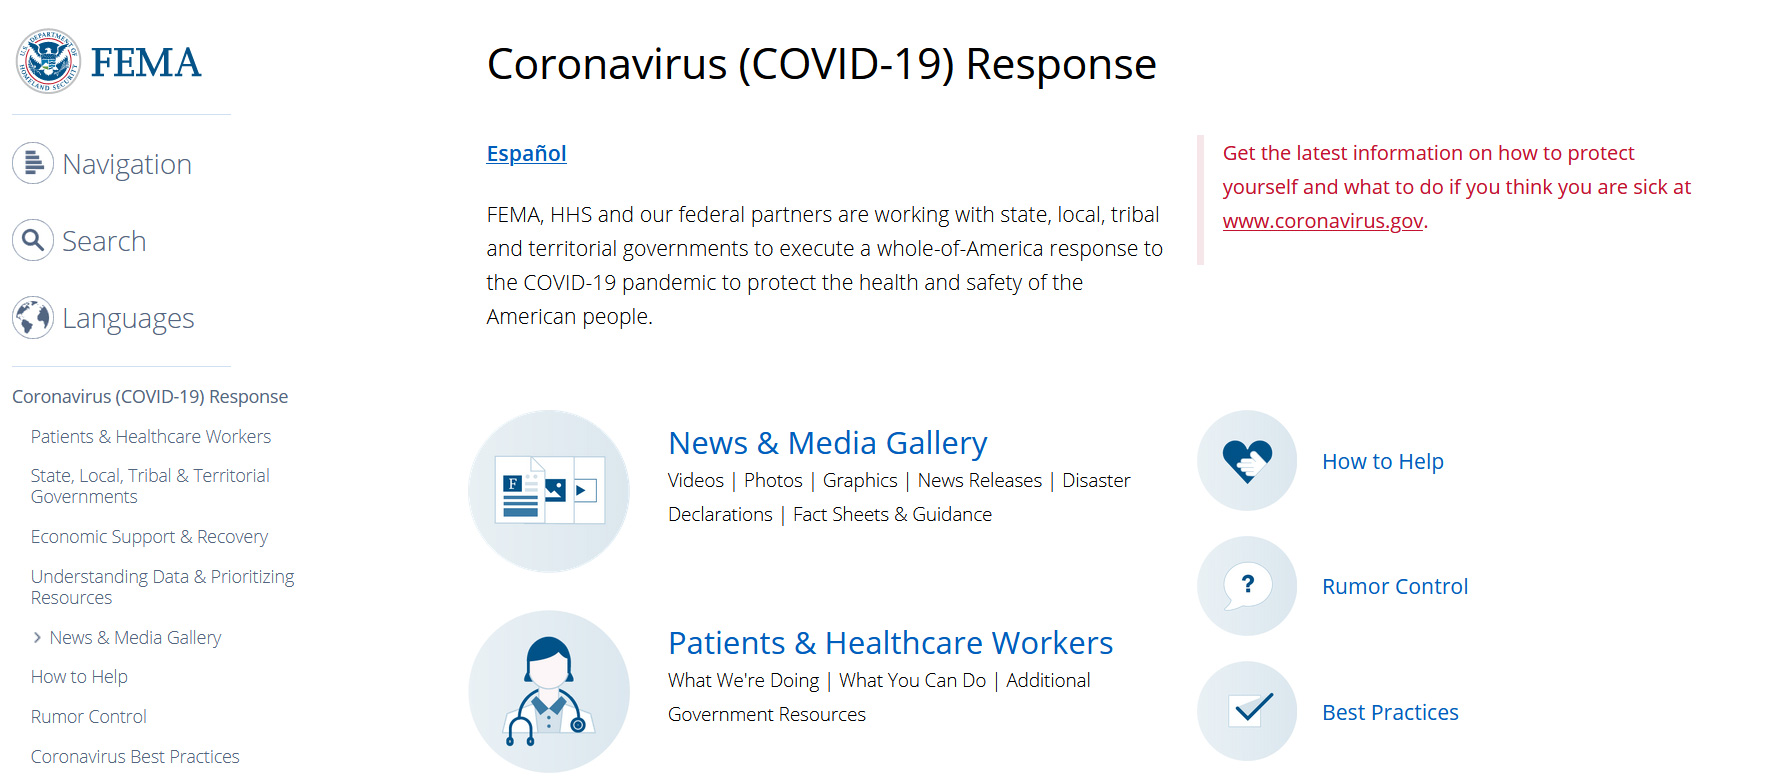 Coronavirus (COVID-19) Response and Alerts